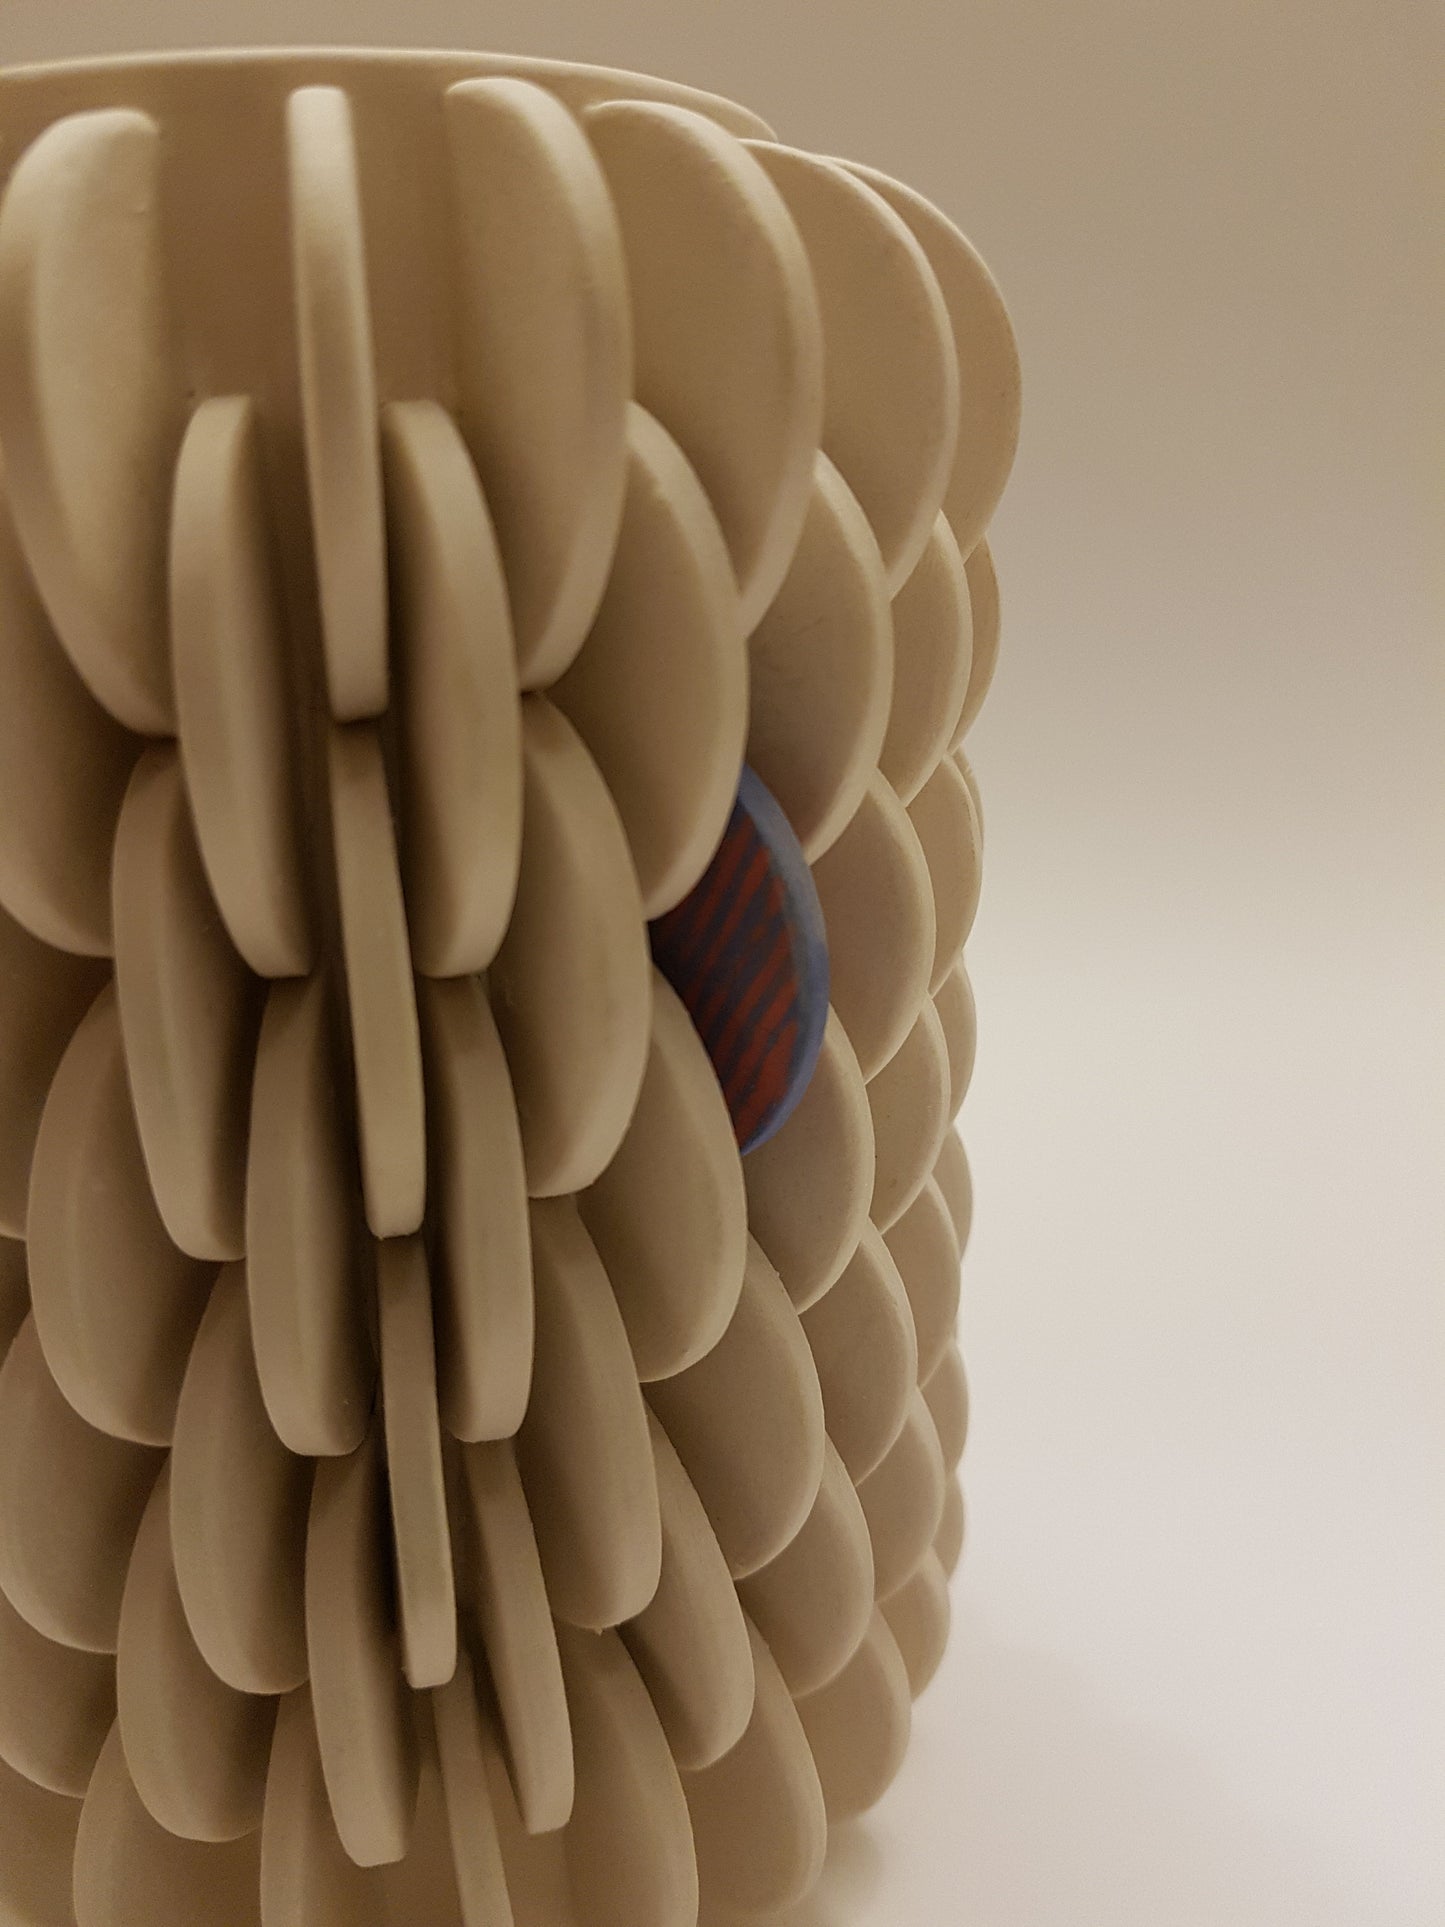 Vase with Single Patterned Disk